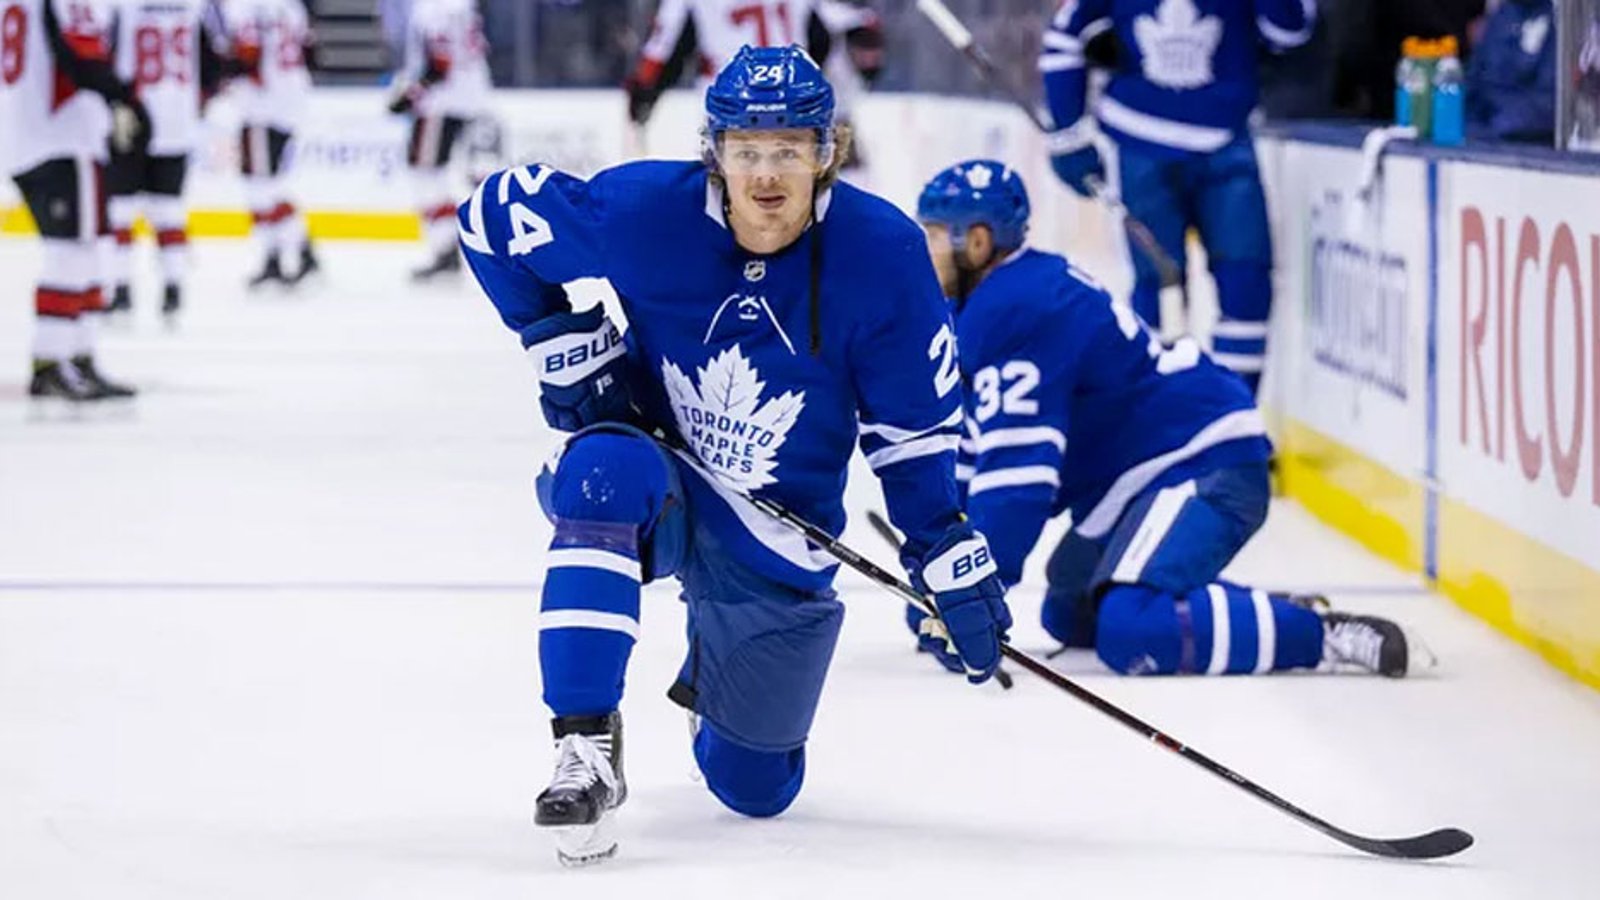 Major update on Kapanen injury from Leafs practice